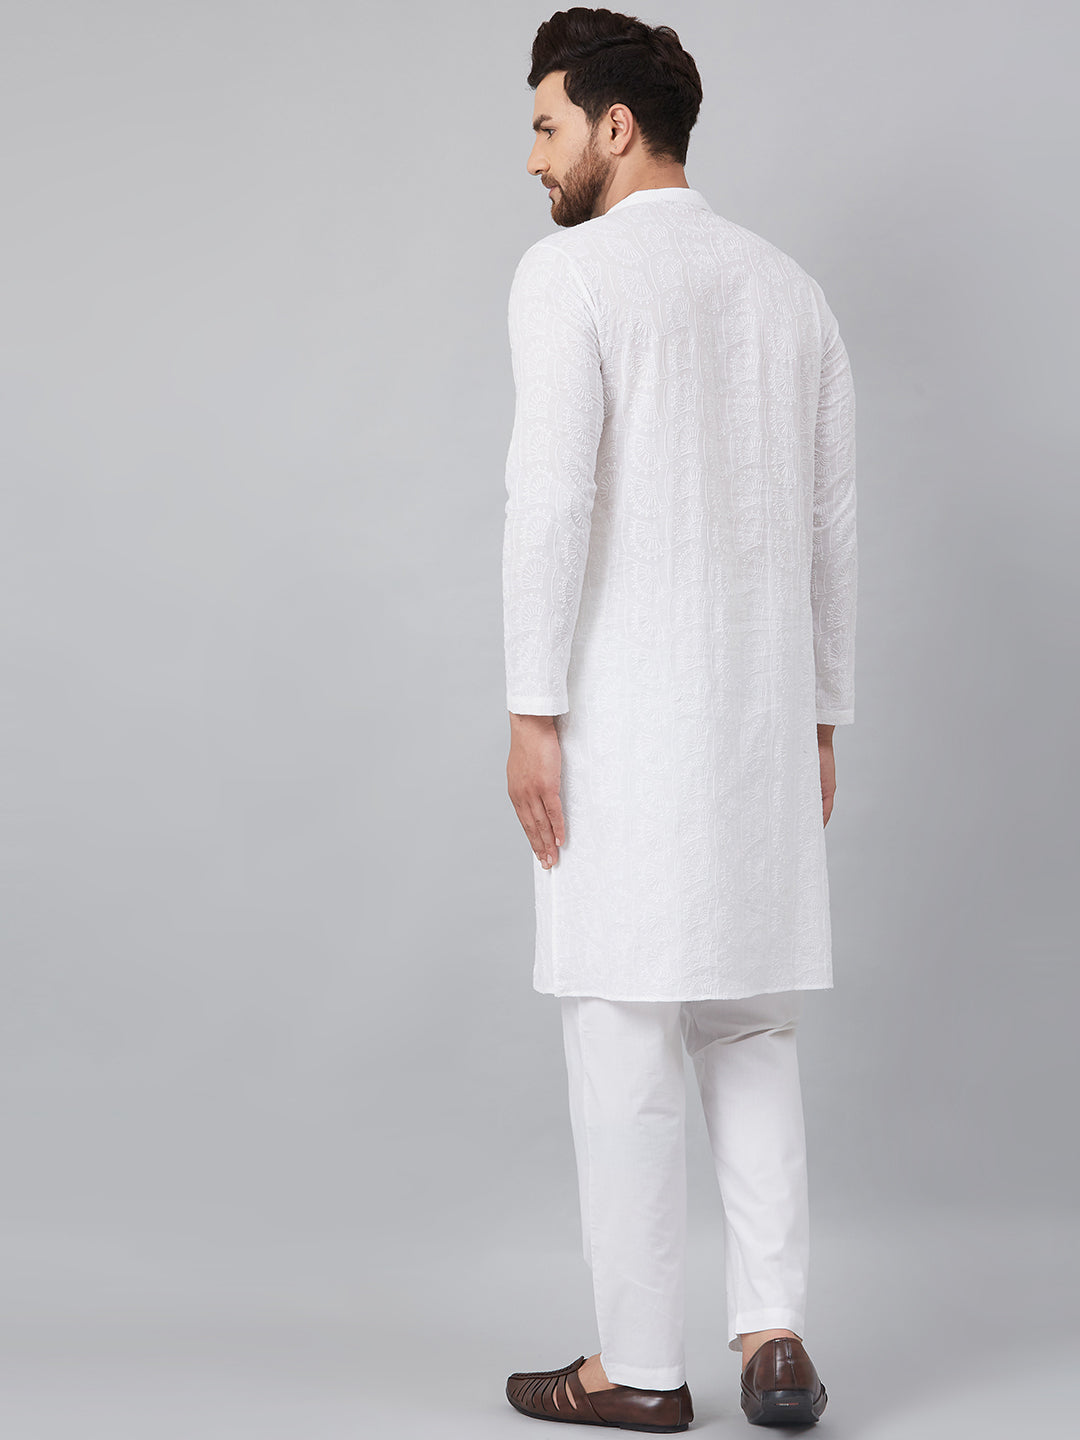 Buy Men's White Cotton Chikankari Embroidered Kurta Pajama Set Online - Back